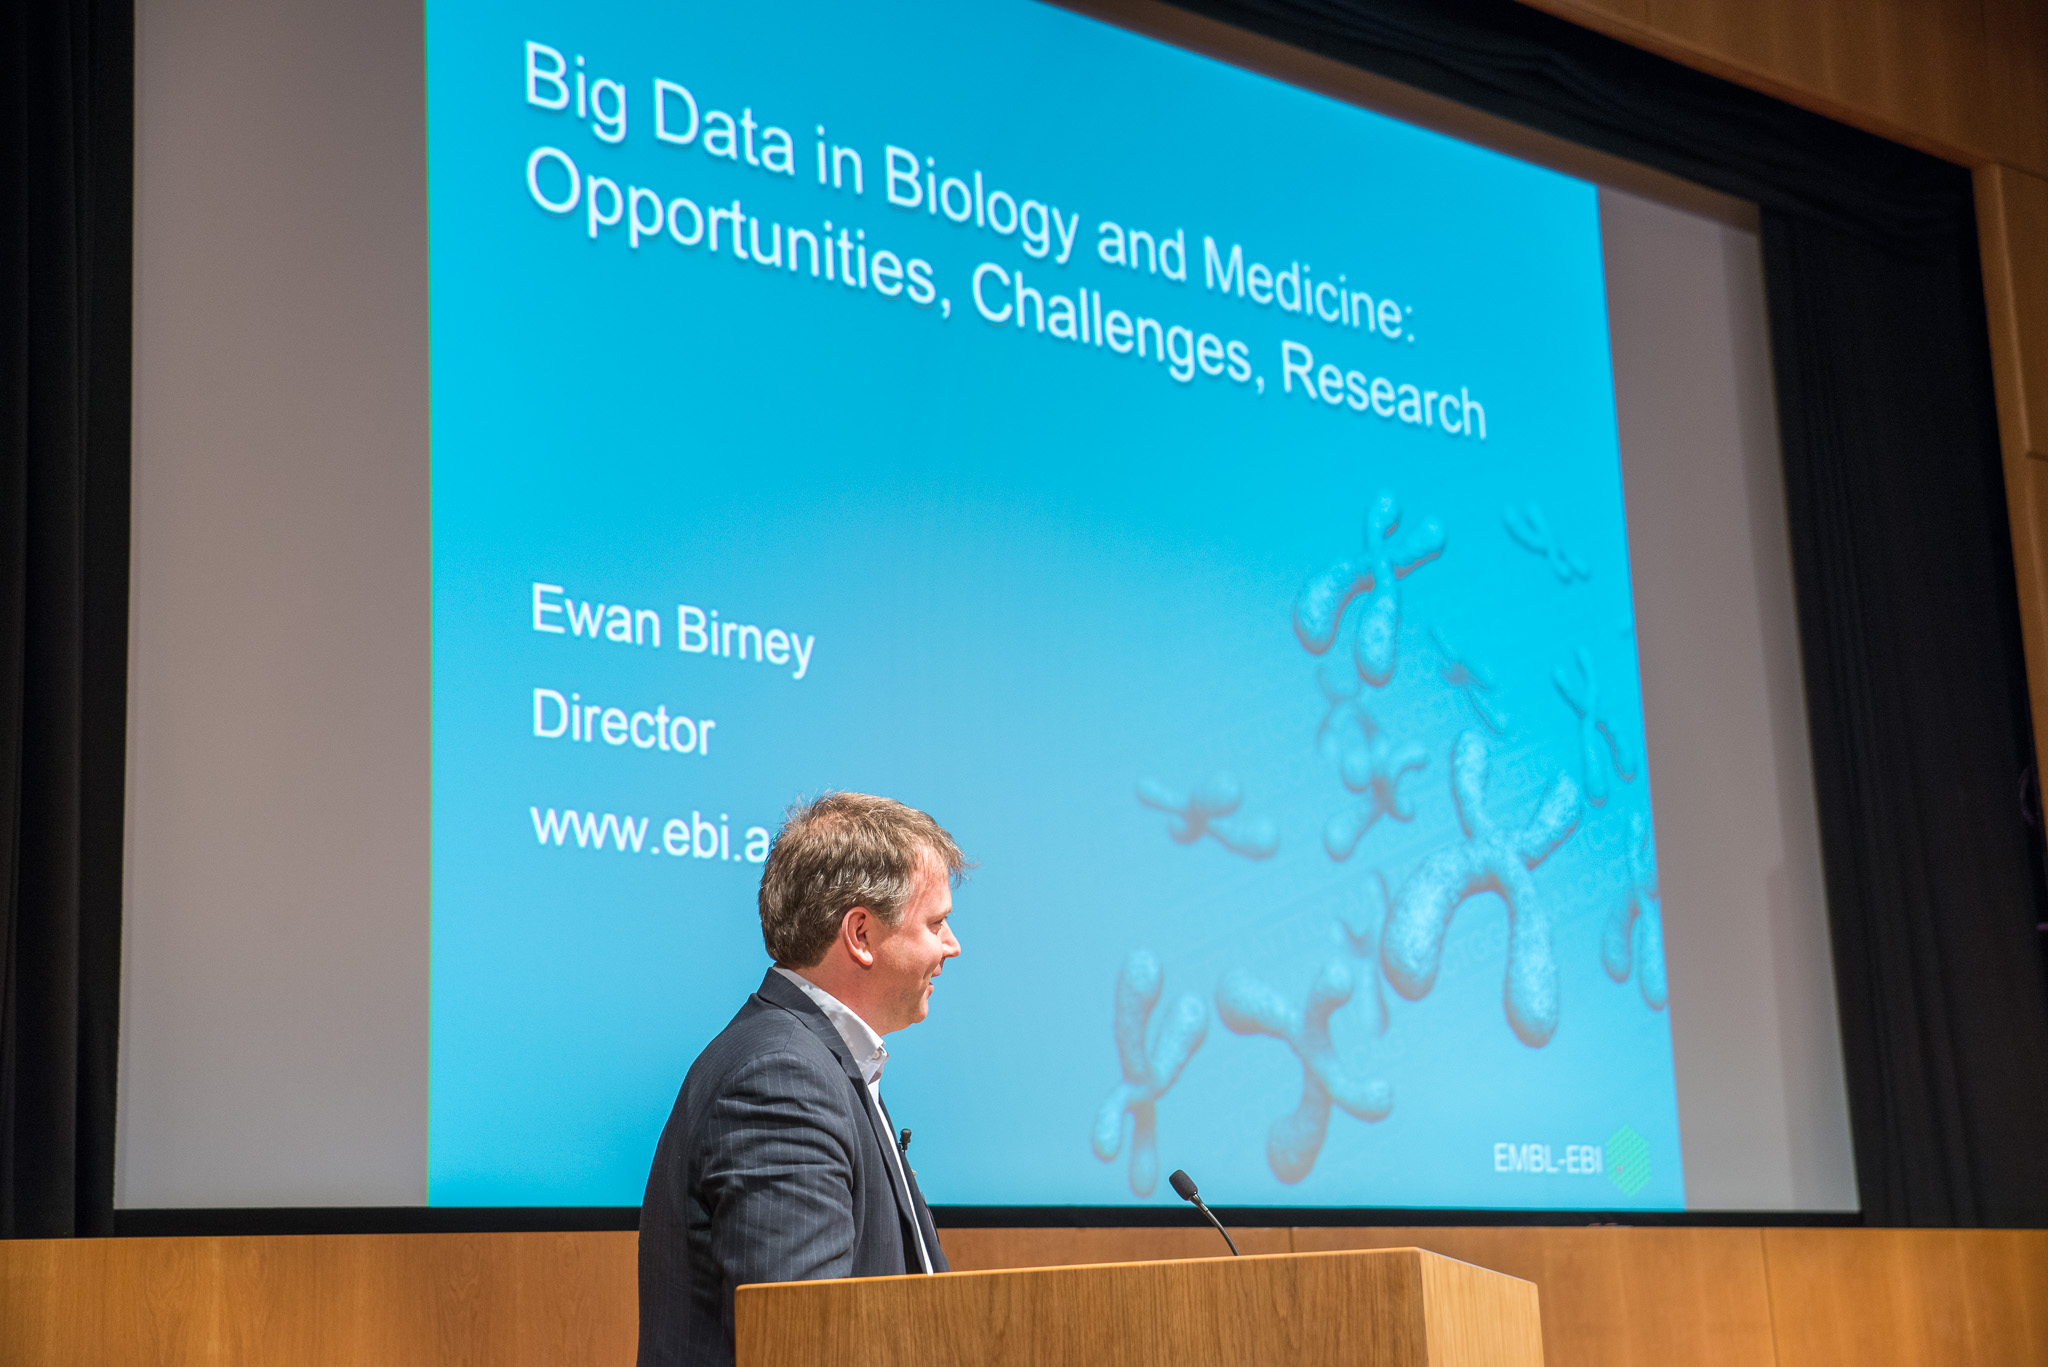 BioBeat15: Ewan Birney on big data in biology and medicine